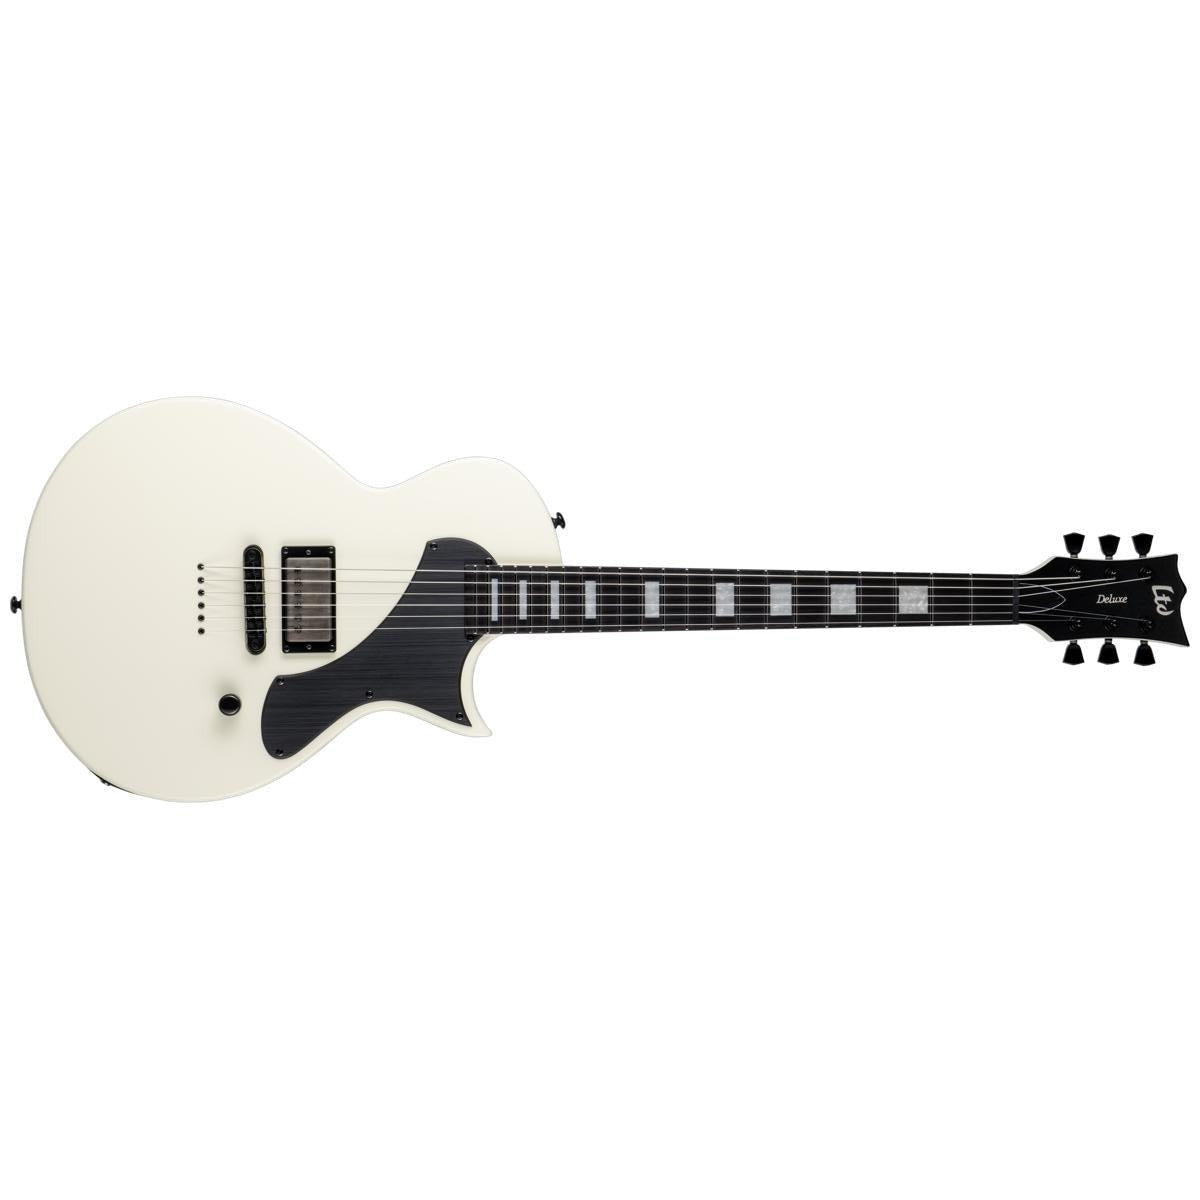 ESP LTD EC-01FT Eclipse Electric Guitar Olympic White w/ Seymour Duncan